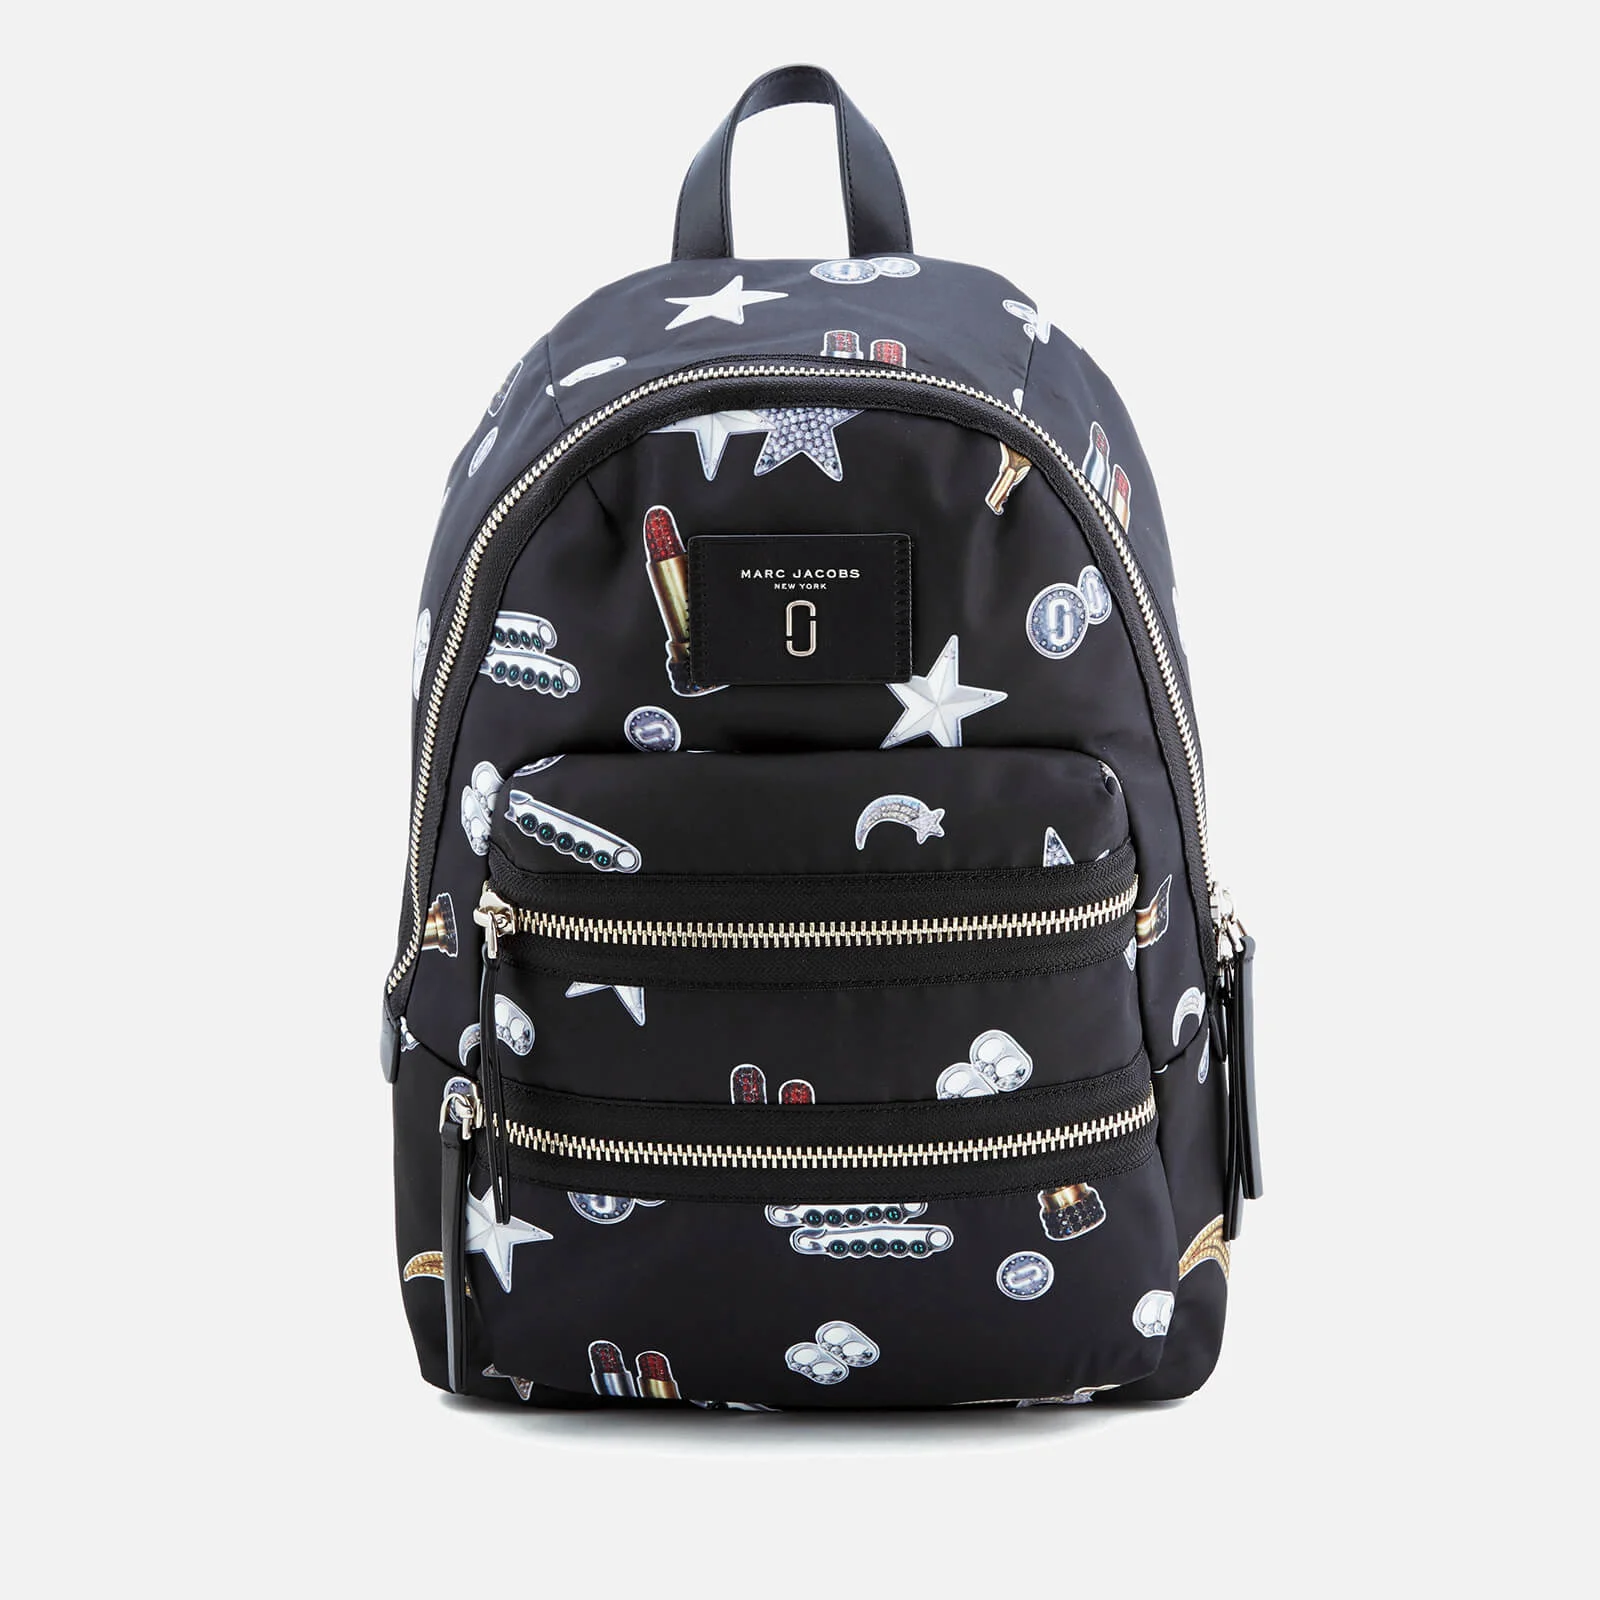 Marc Jacobs Women's Tossed Charms Printed Biker Backpack - Black Multi Image 1